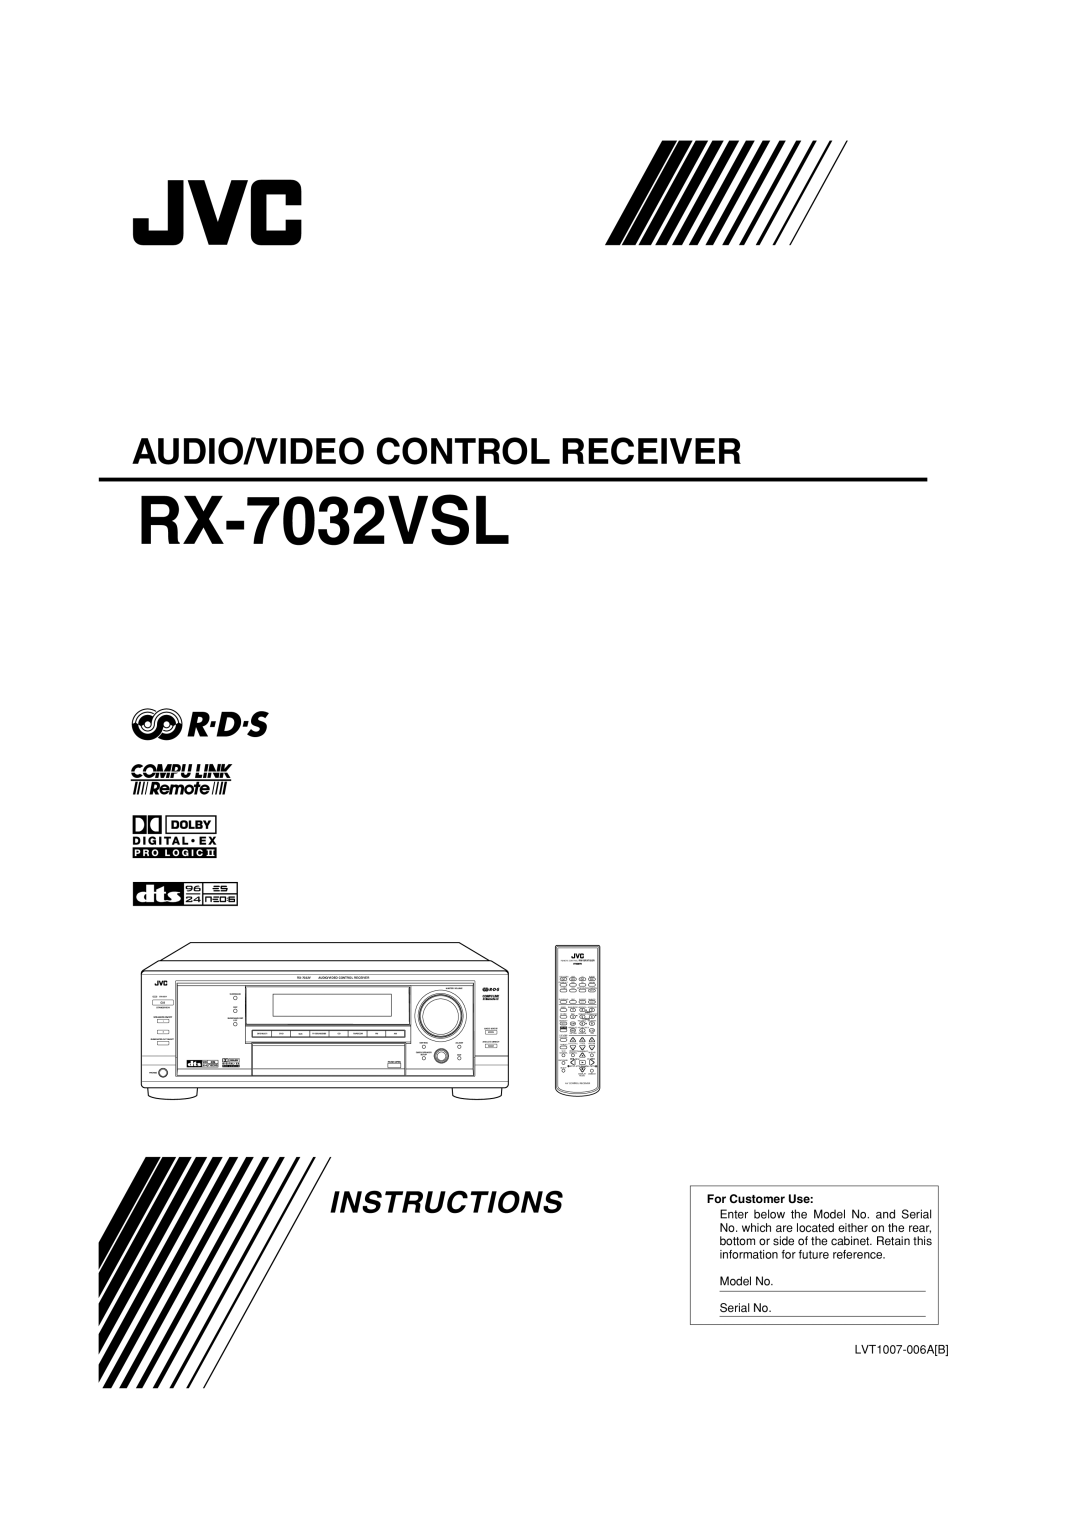 JVC RX-7032VSL manual Audio/Video Control Receiver, Instructions, Catv/Dbs Vcr, Master Volume, Surround, Standby, Ex/Es 